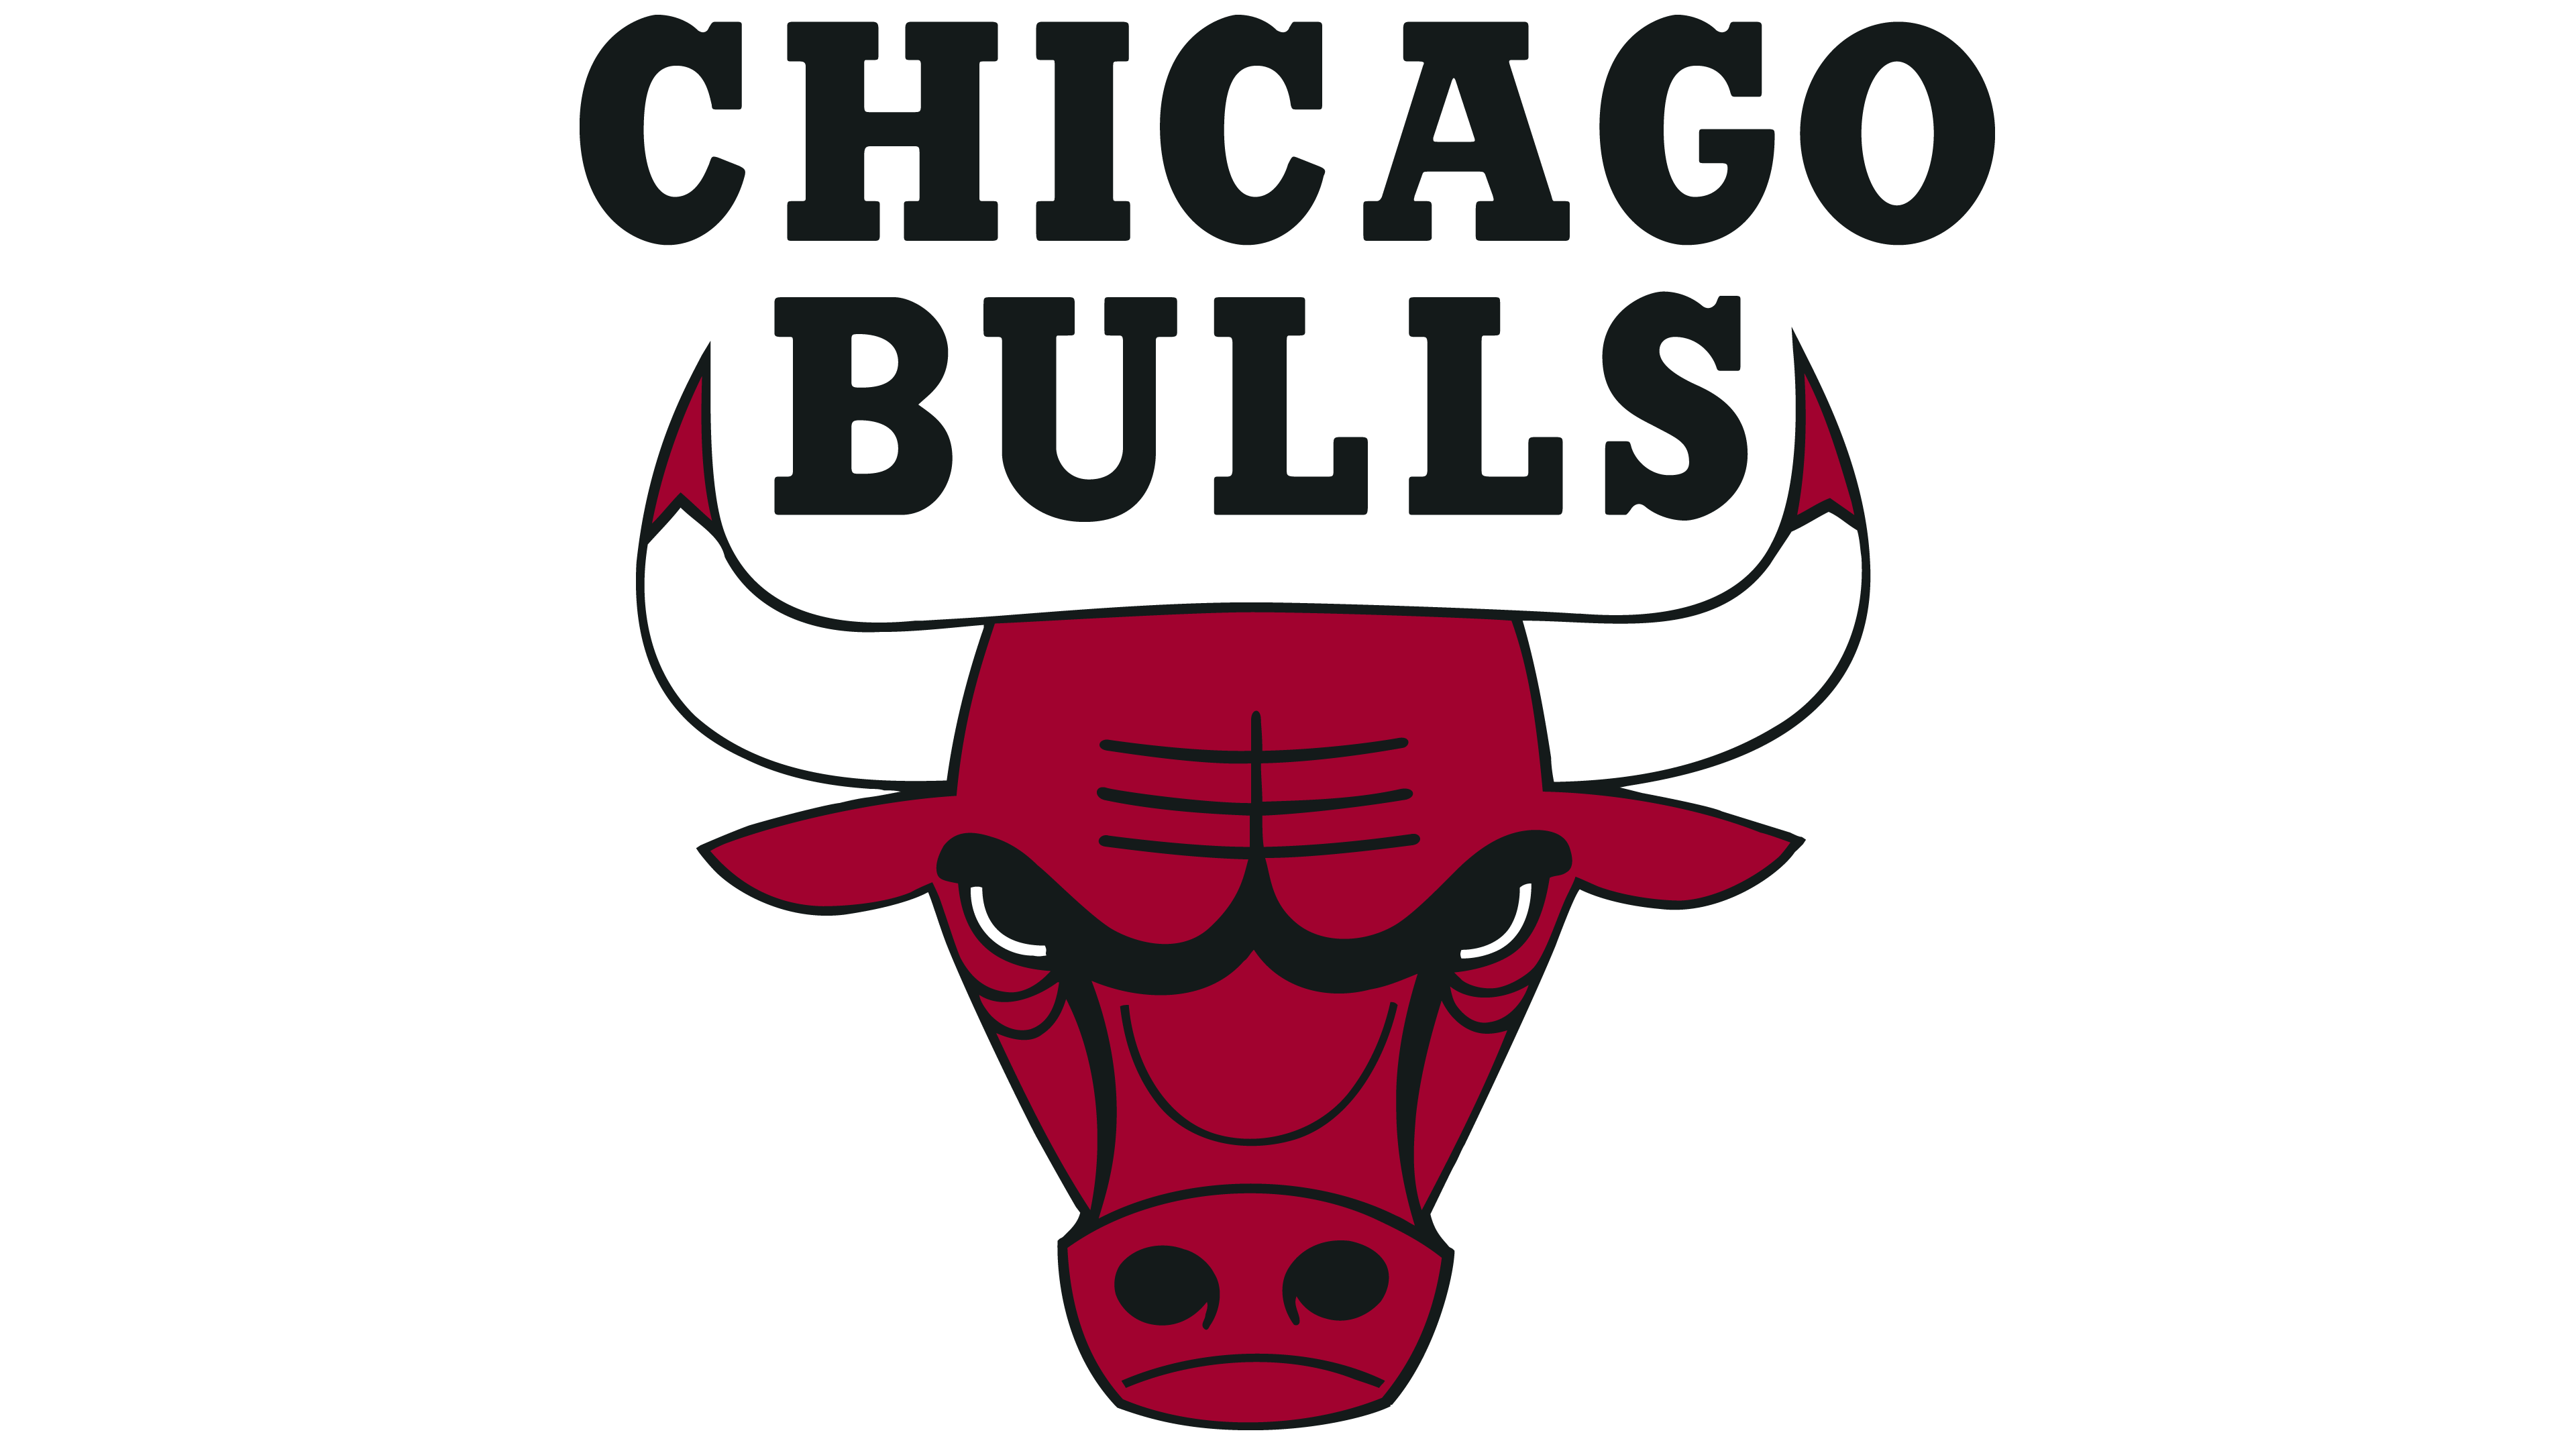 Bulls Logo - Chicago Bulls Logo - Interesting History of the Team Name and emblem